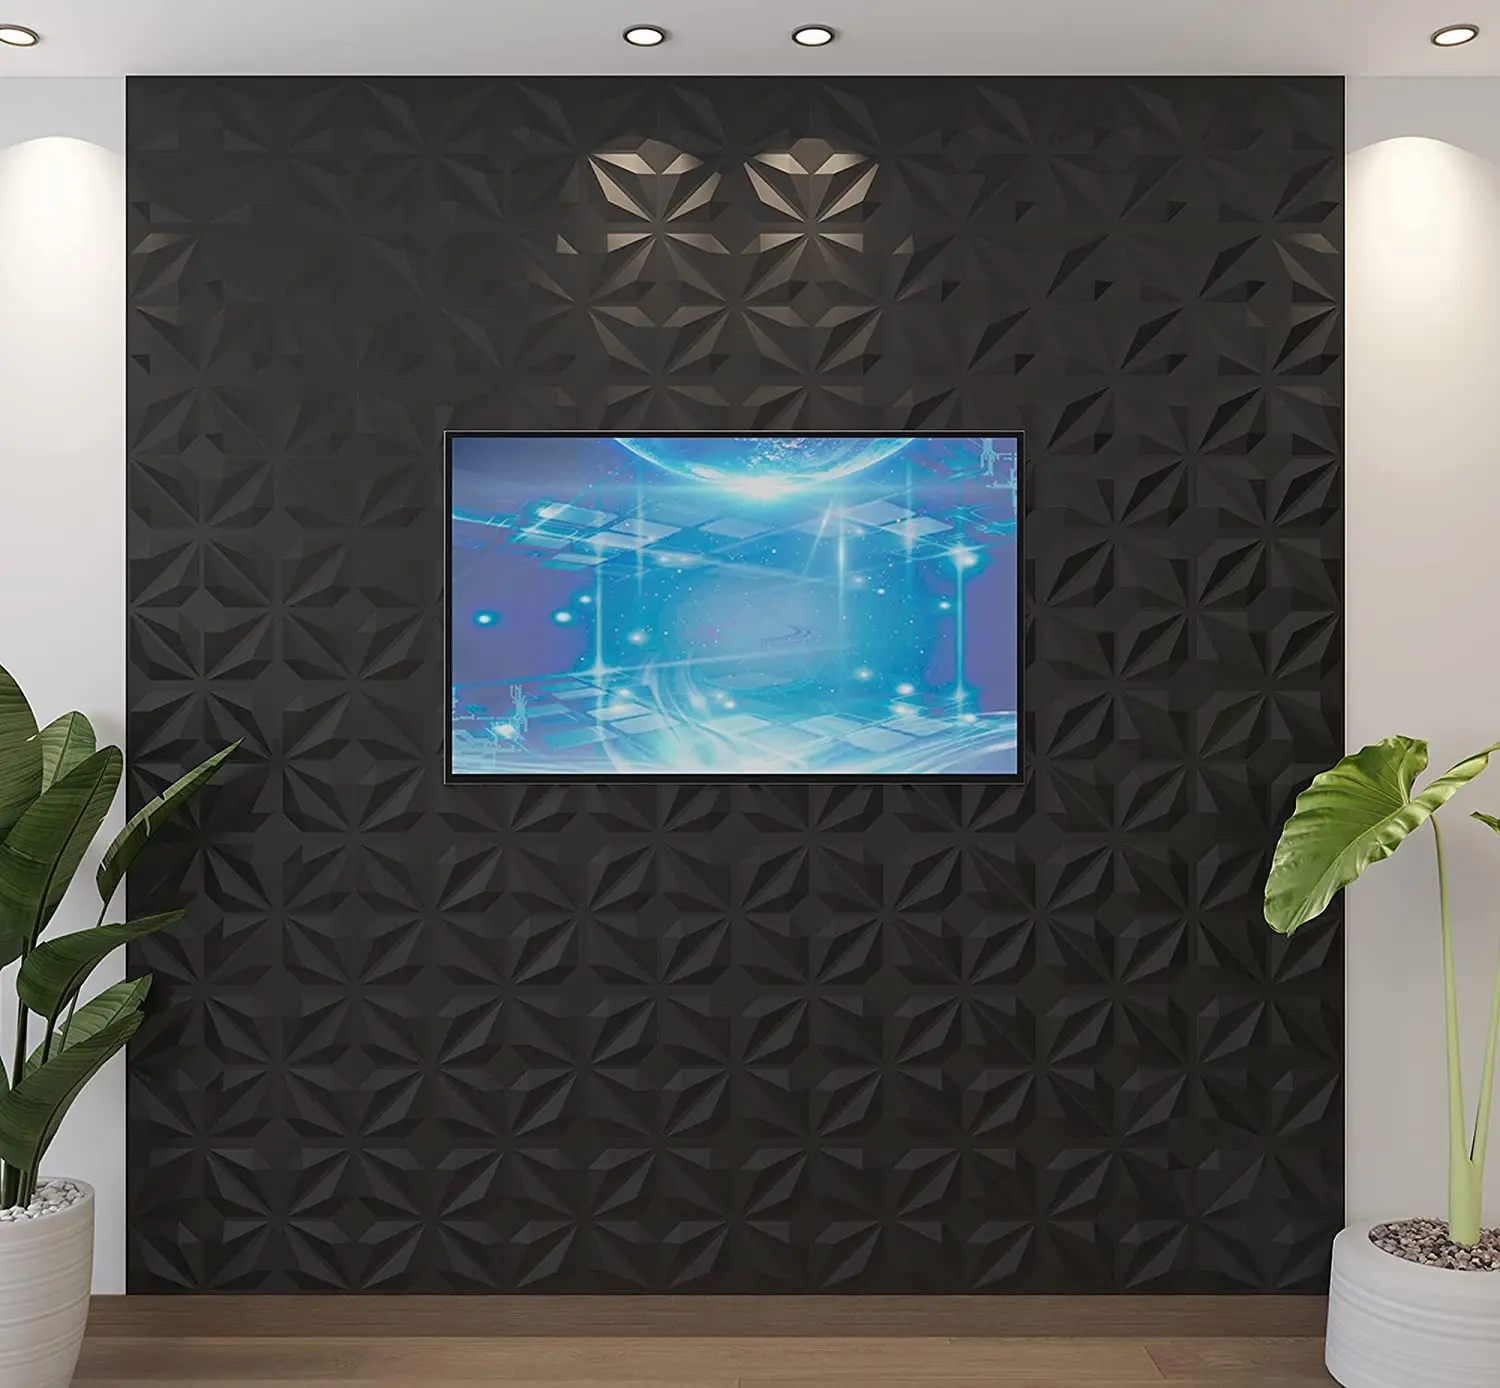 12 Pcs Super 3D Art Wall Panel PVC Waterproof renovation 3D wall sticker Tile Decor Diamond Design DIY Home Decor11.81''x11.81'' images - 6